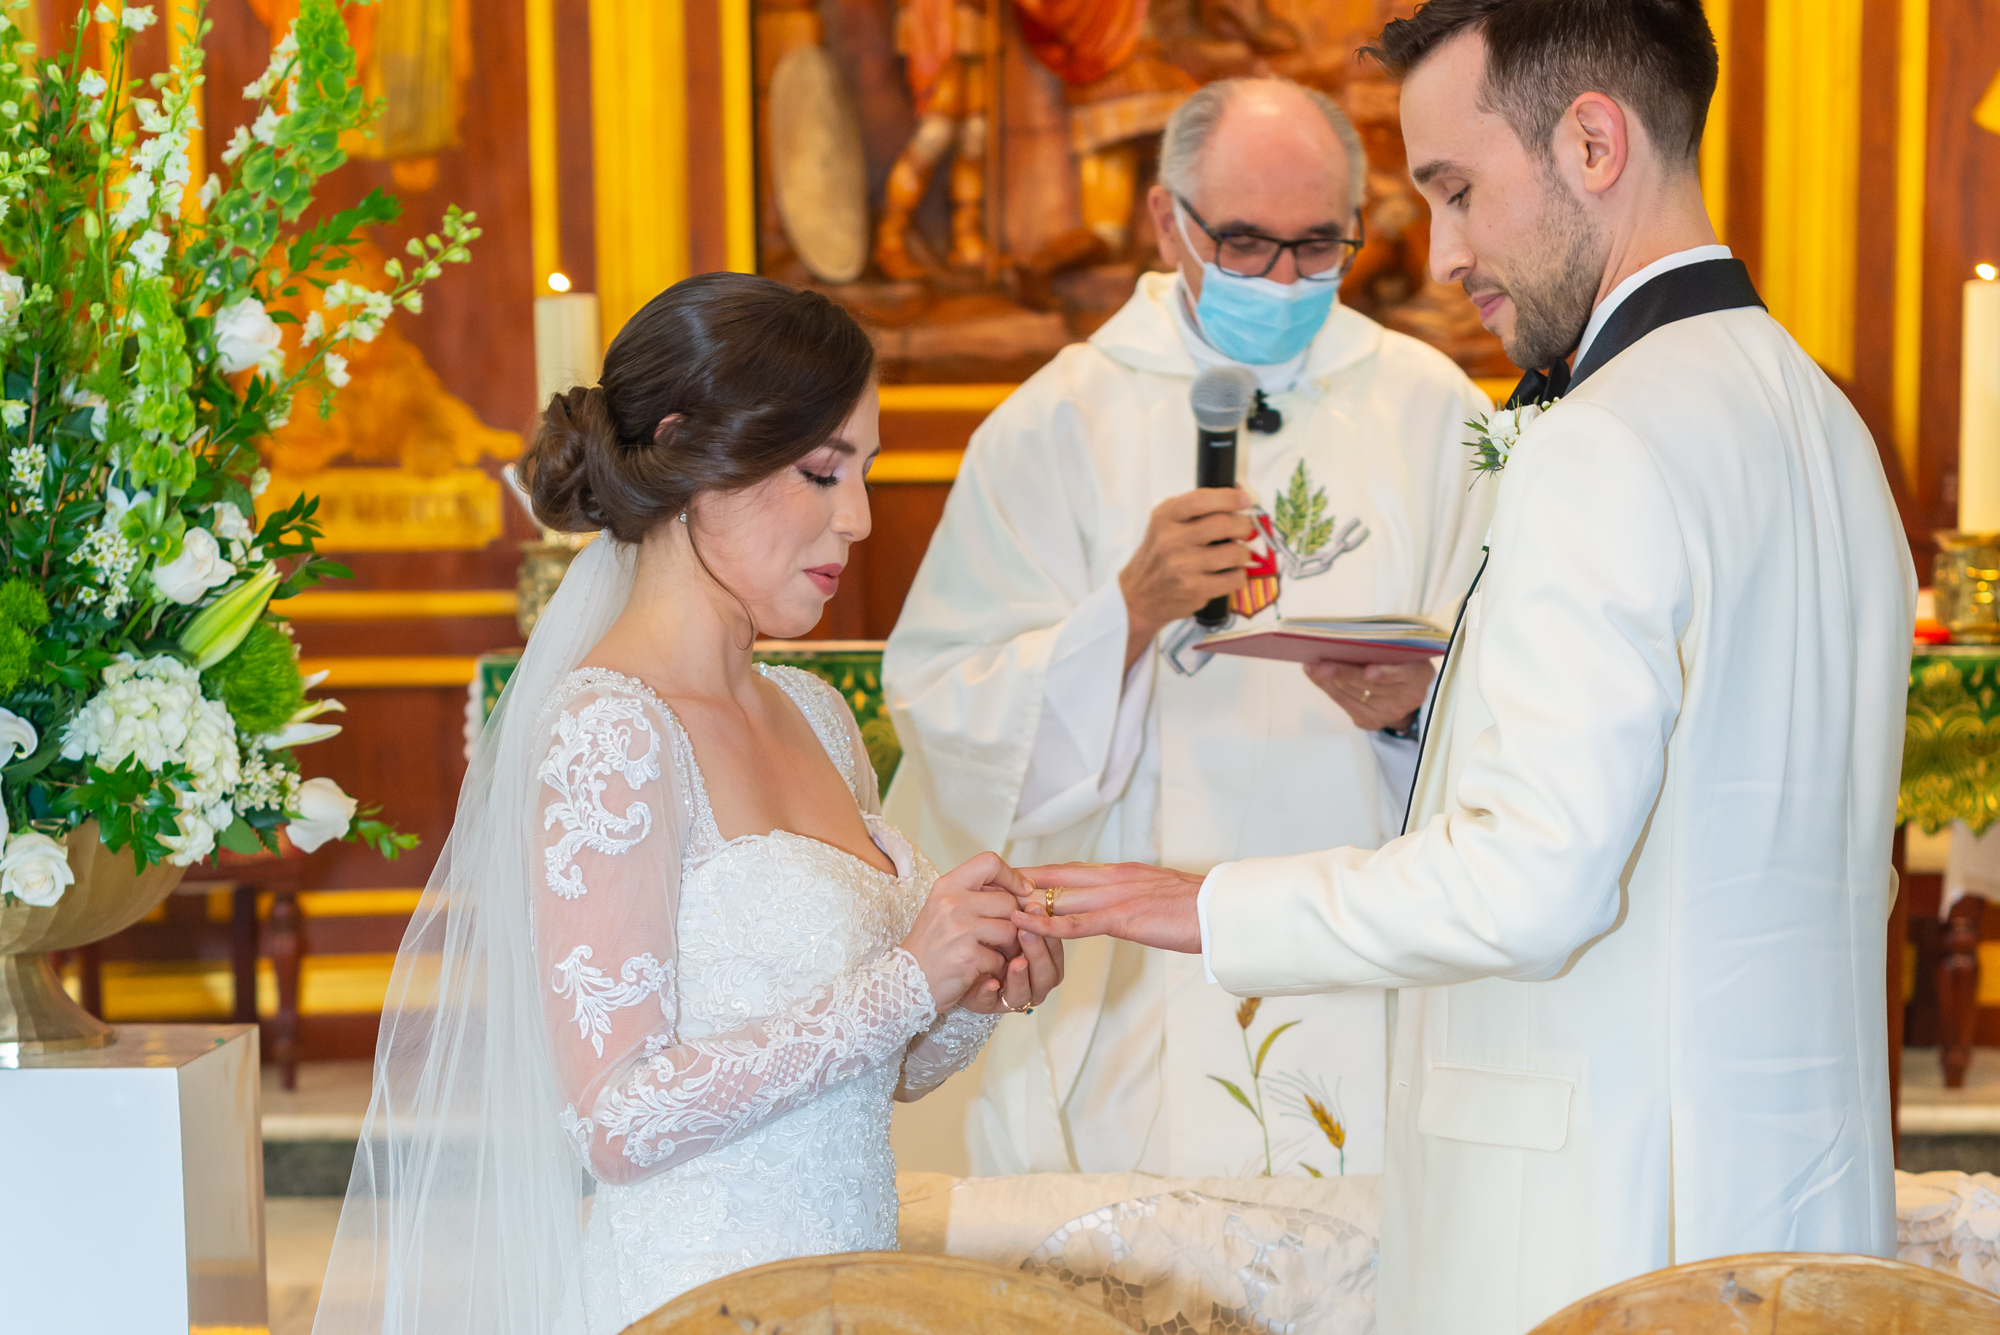 Bride puts ring on groom's finger